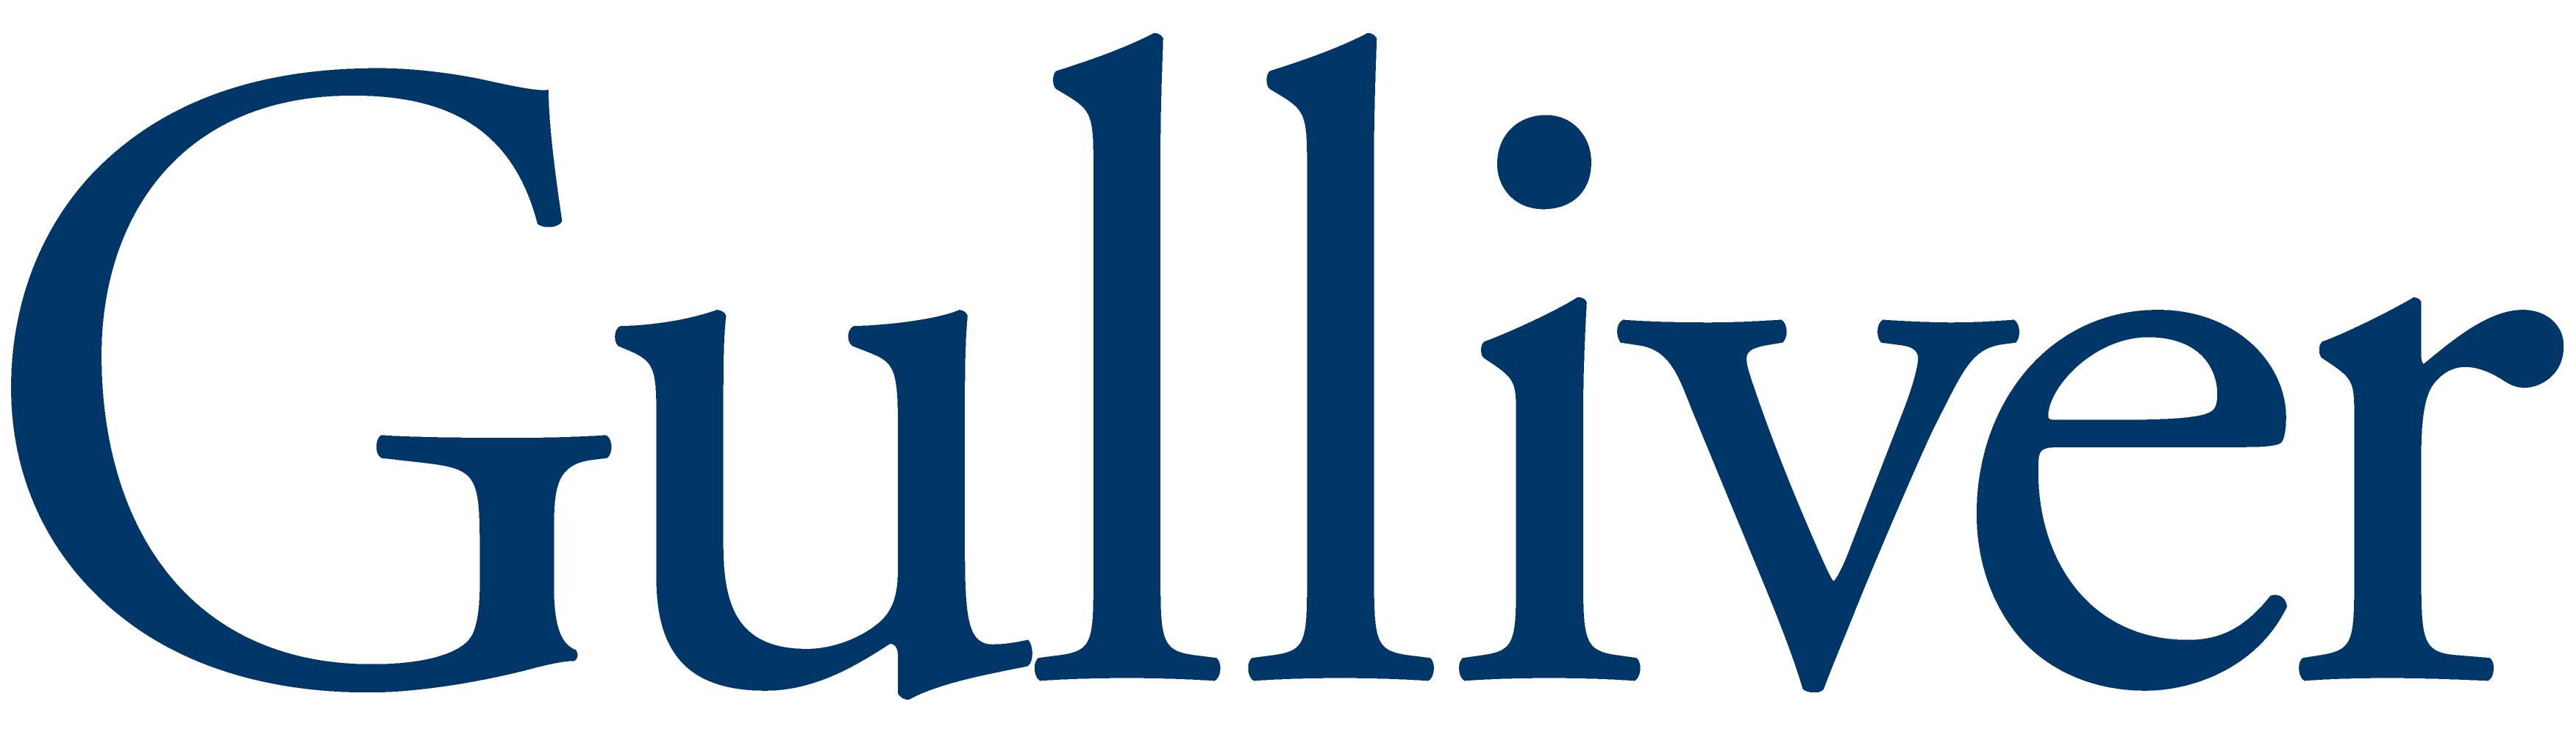 Gulliver's Logo - Visual Arts Support - Gulliver Schools